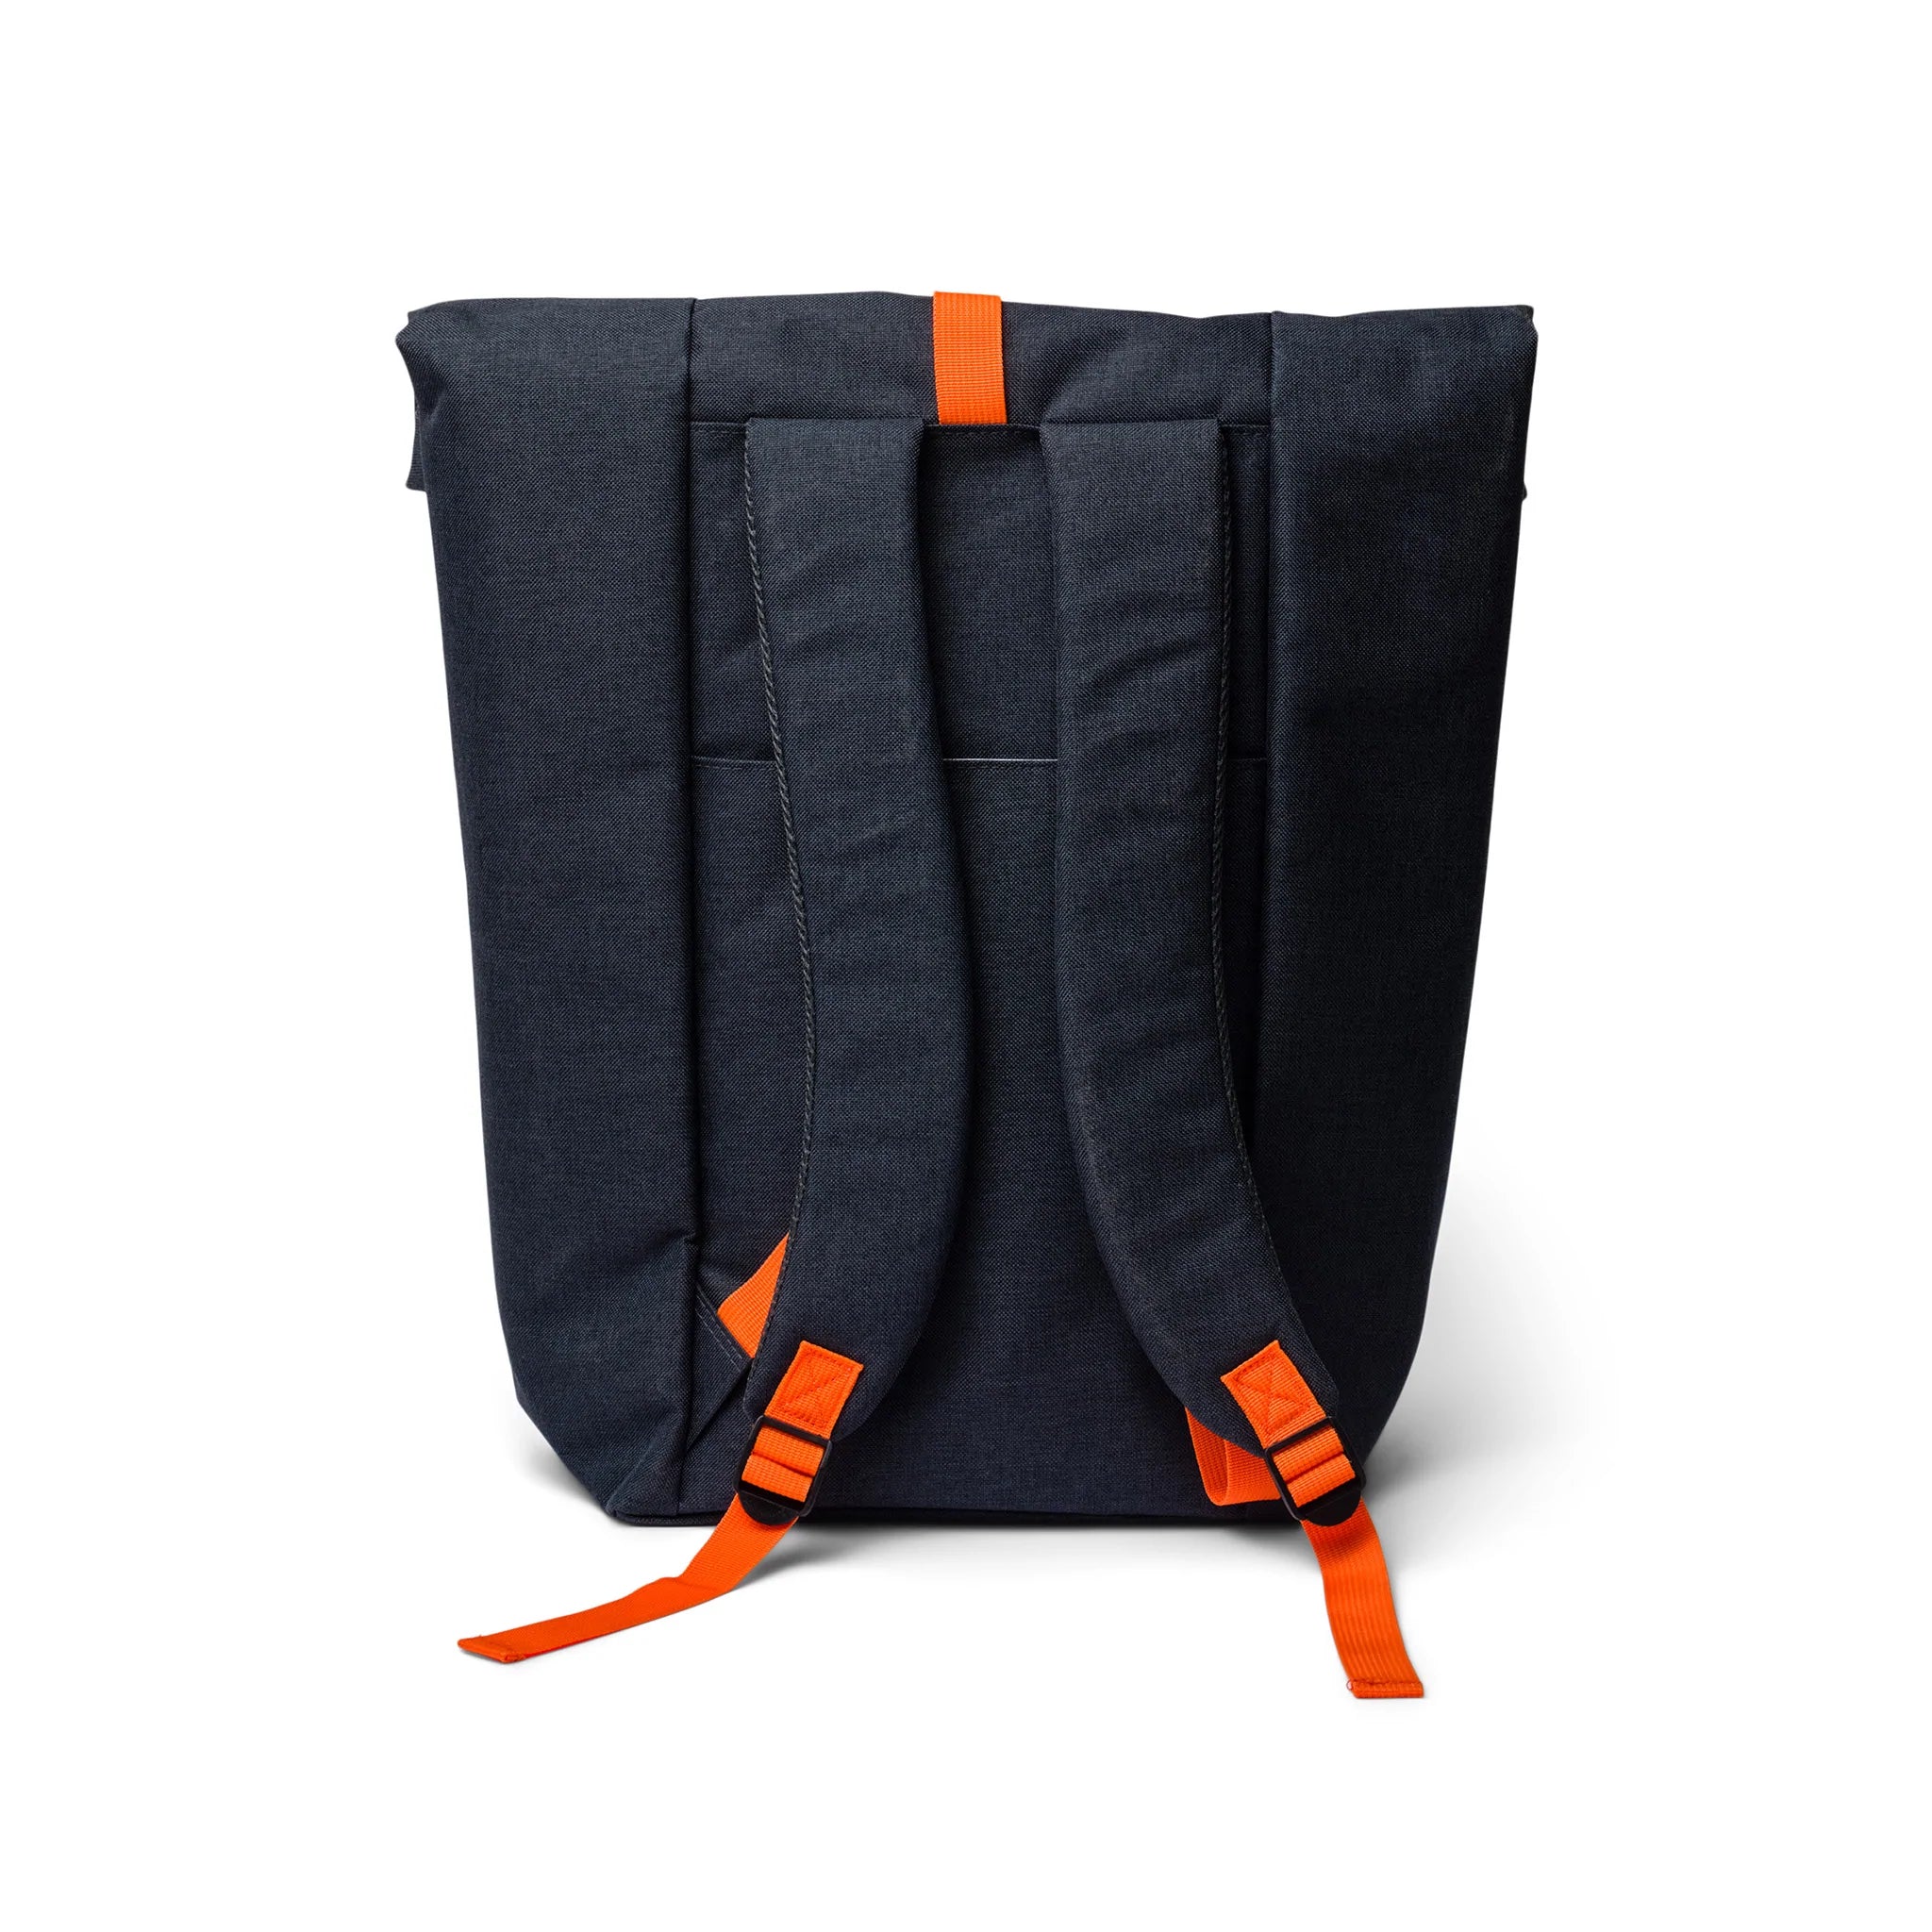 Gentleman's Hardware Insulated Cooler Backpack 20L